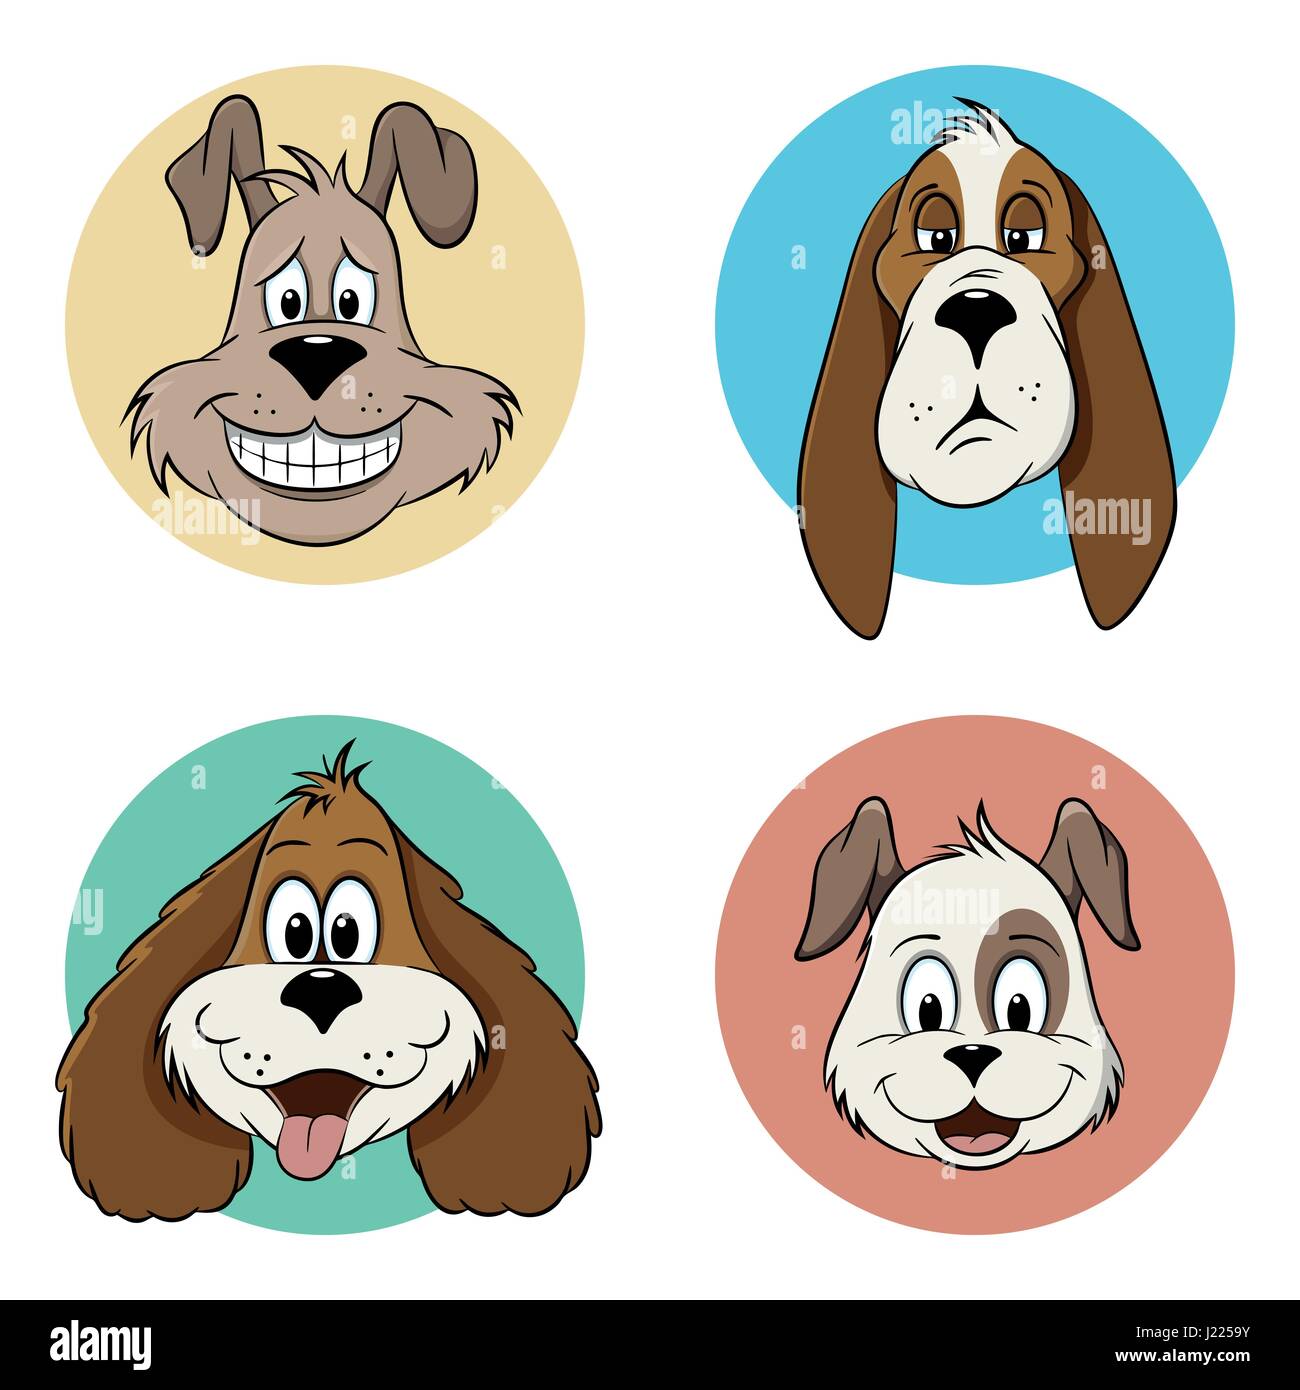 Avatar Dog PNG Transparent Images Free Download  Vector Files  Pngtree